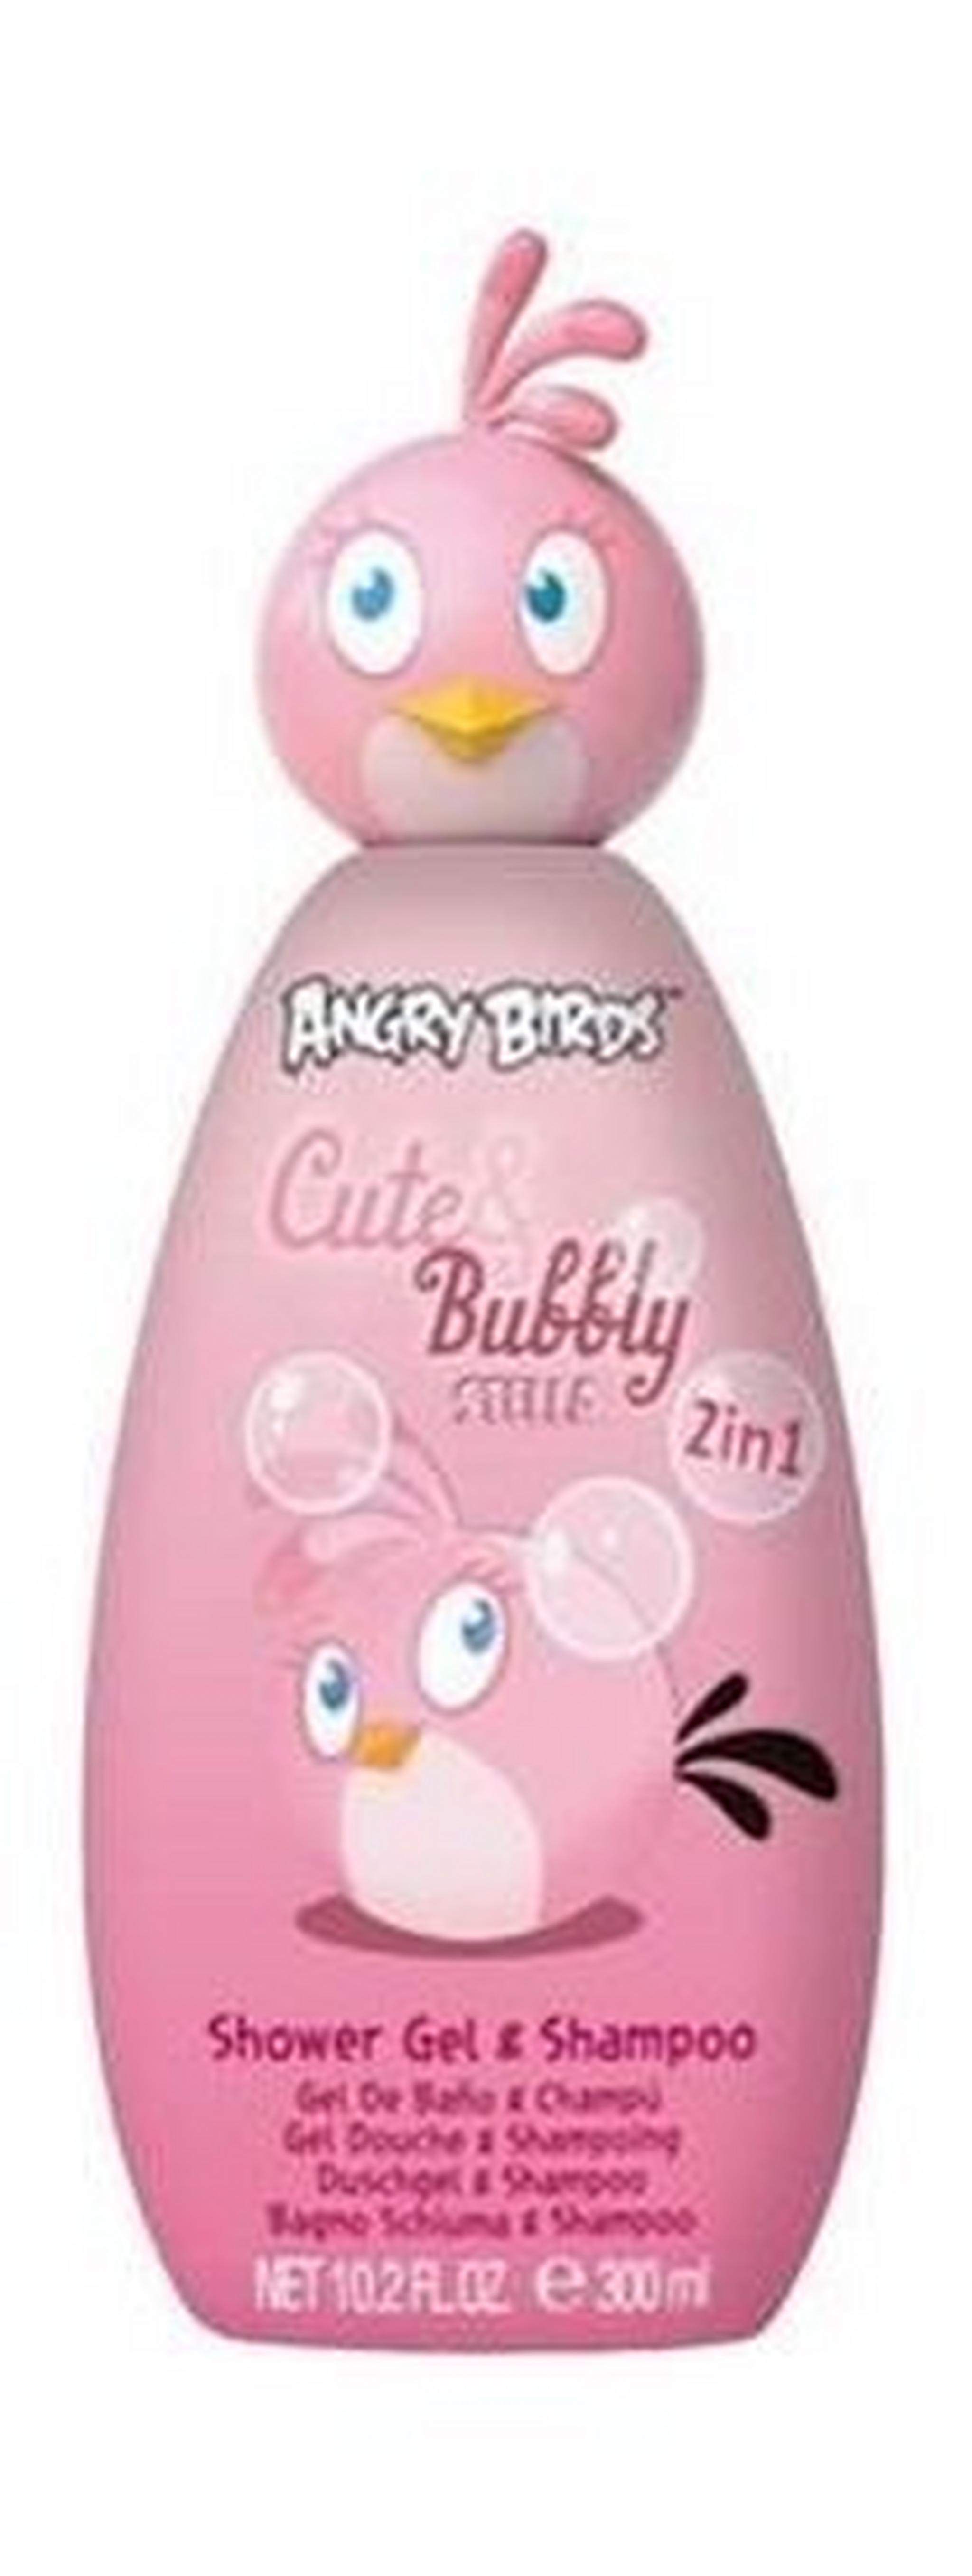 Cartoon Network Stella Cute Bubbly 2in1 300ML Shower Gel & Shampoo With Topper